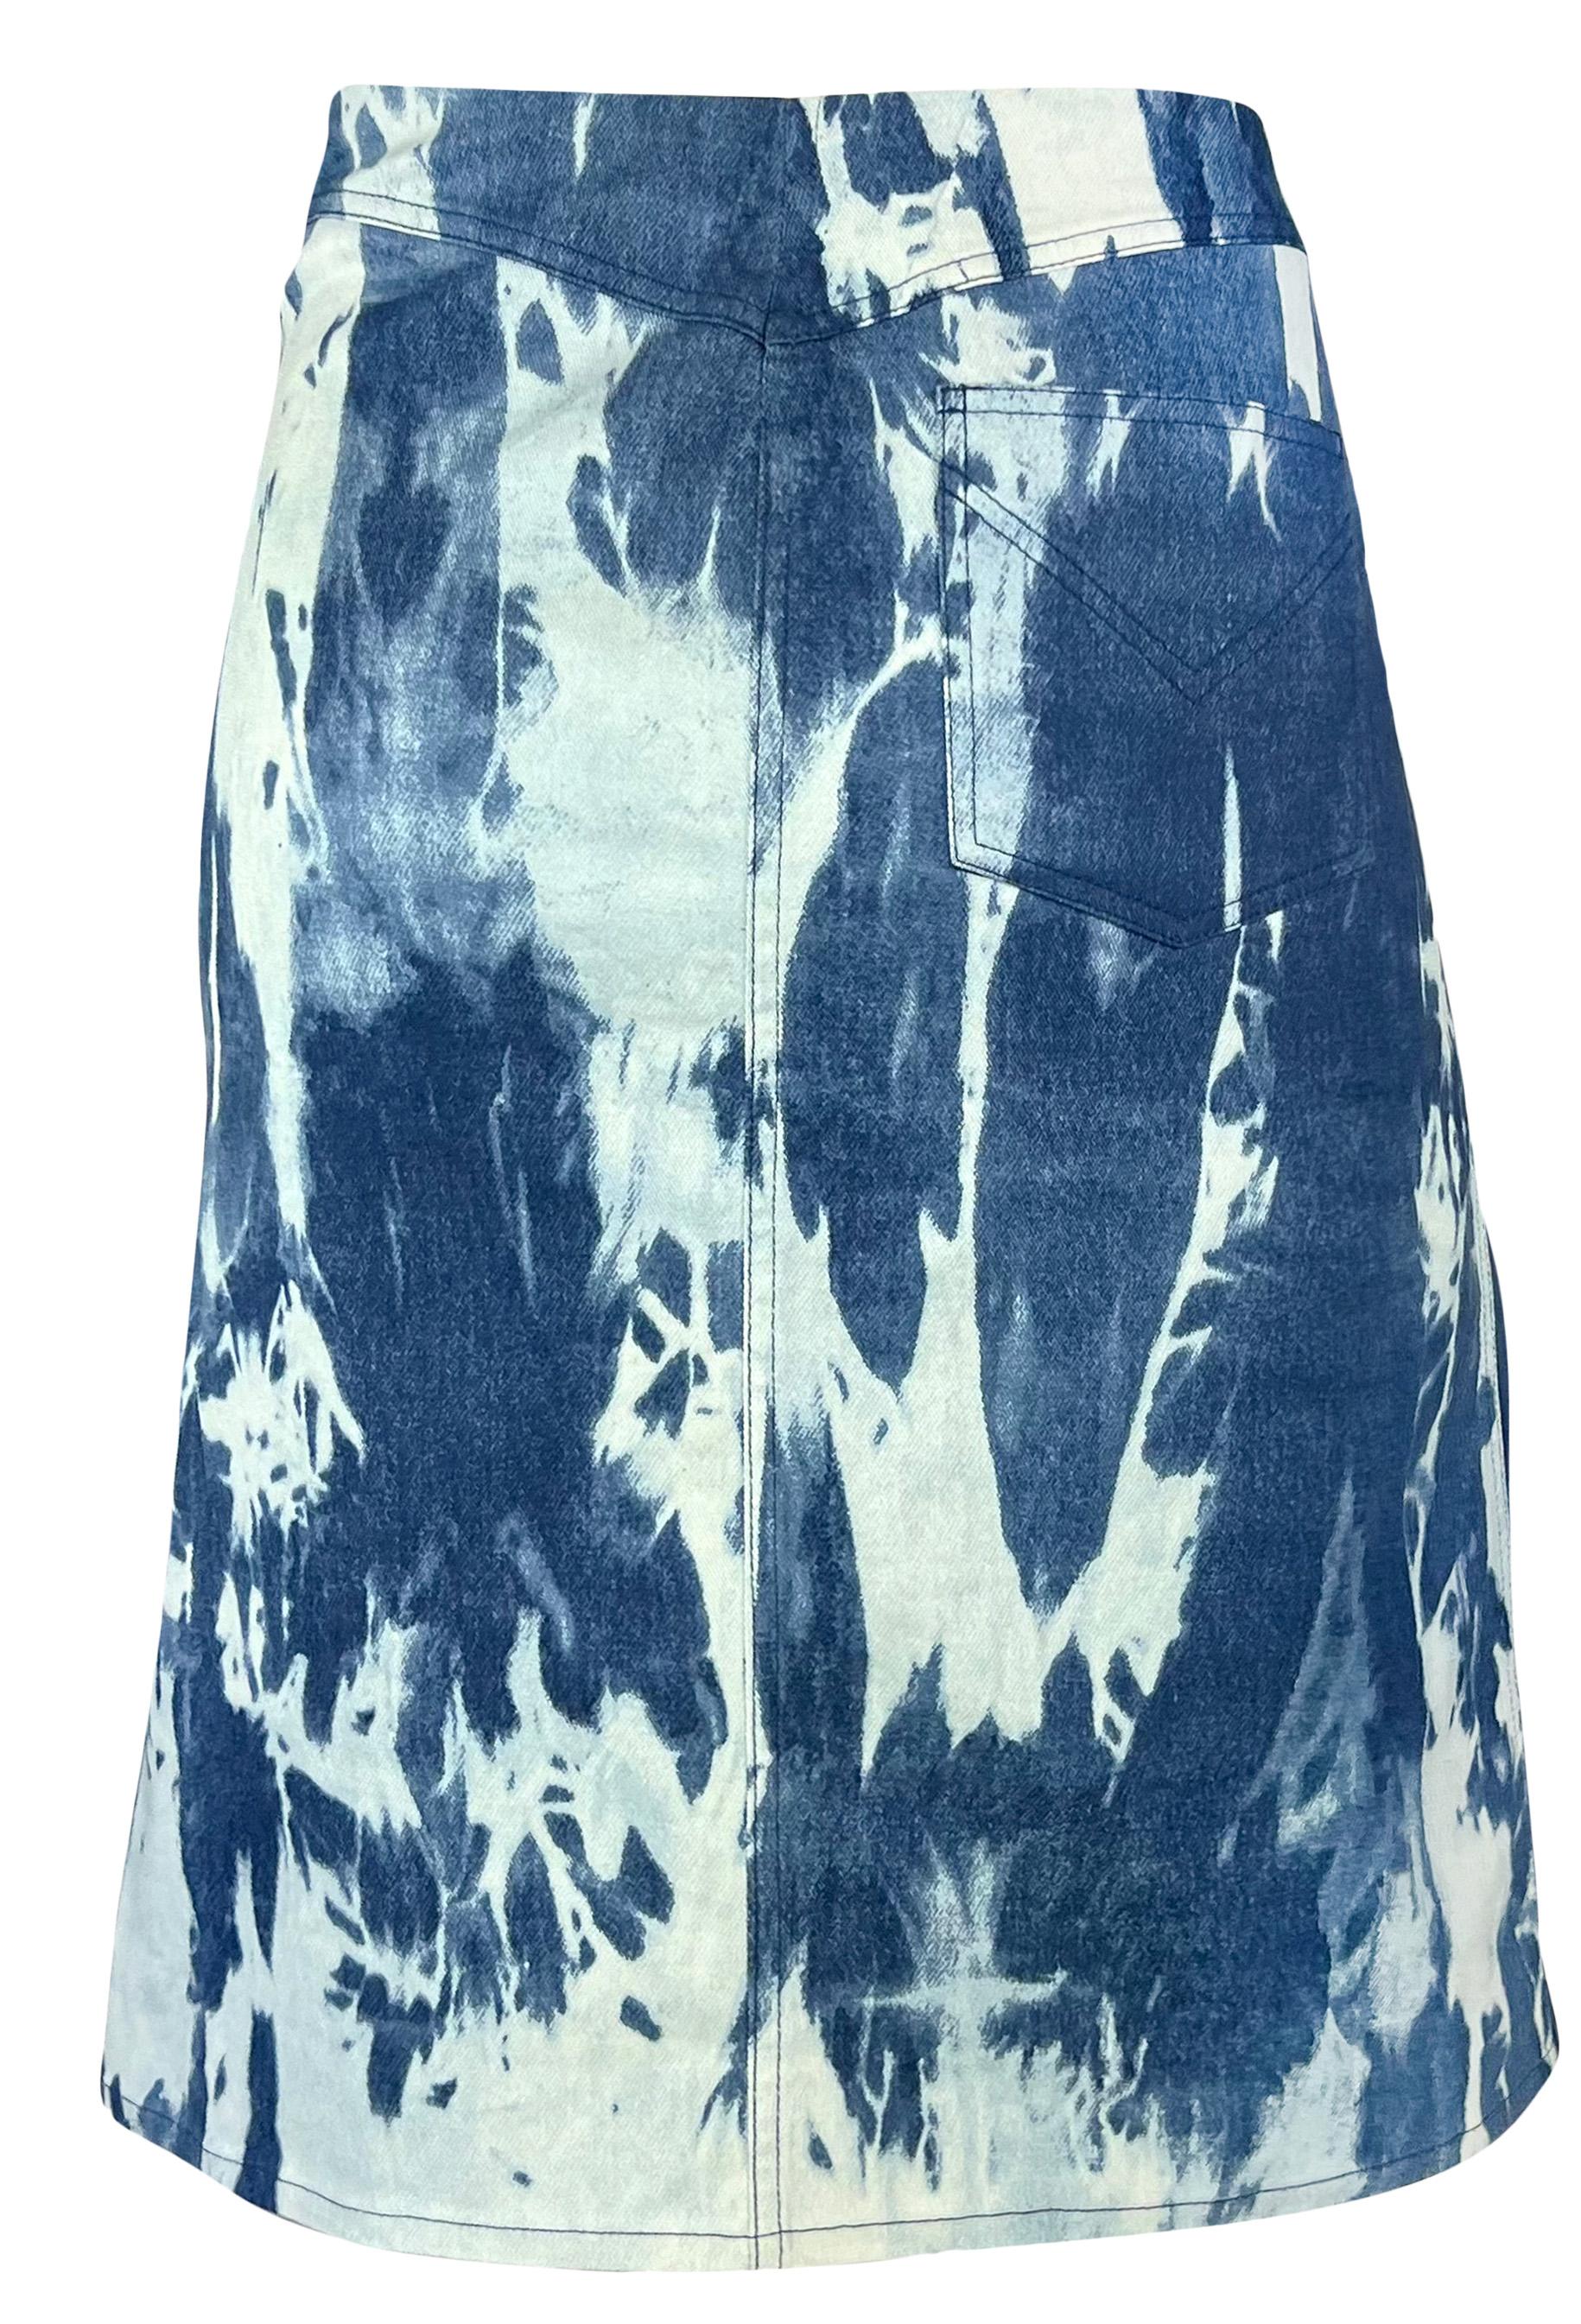 F/W 2000 Christian Dior by John Galliano Tie-Dye Blue Denim Asymmetric Skirt For Sale 2